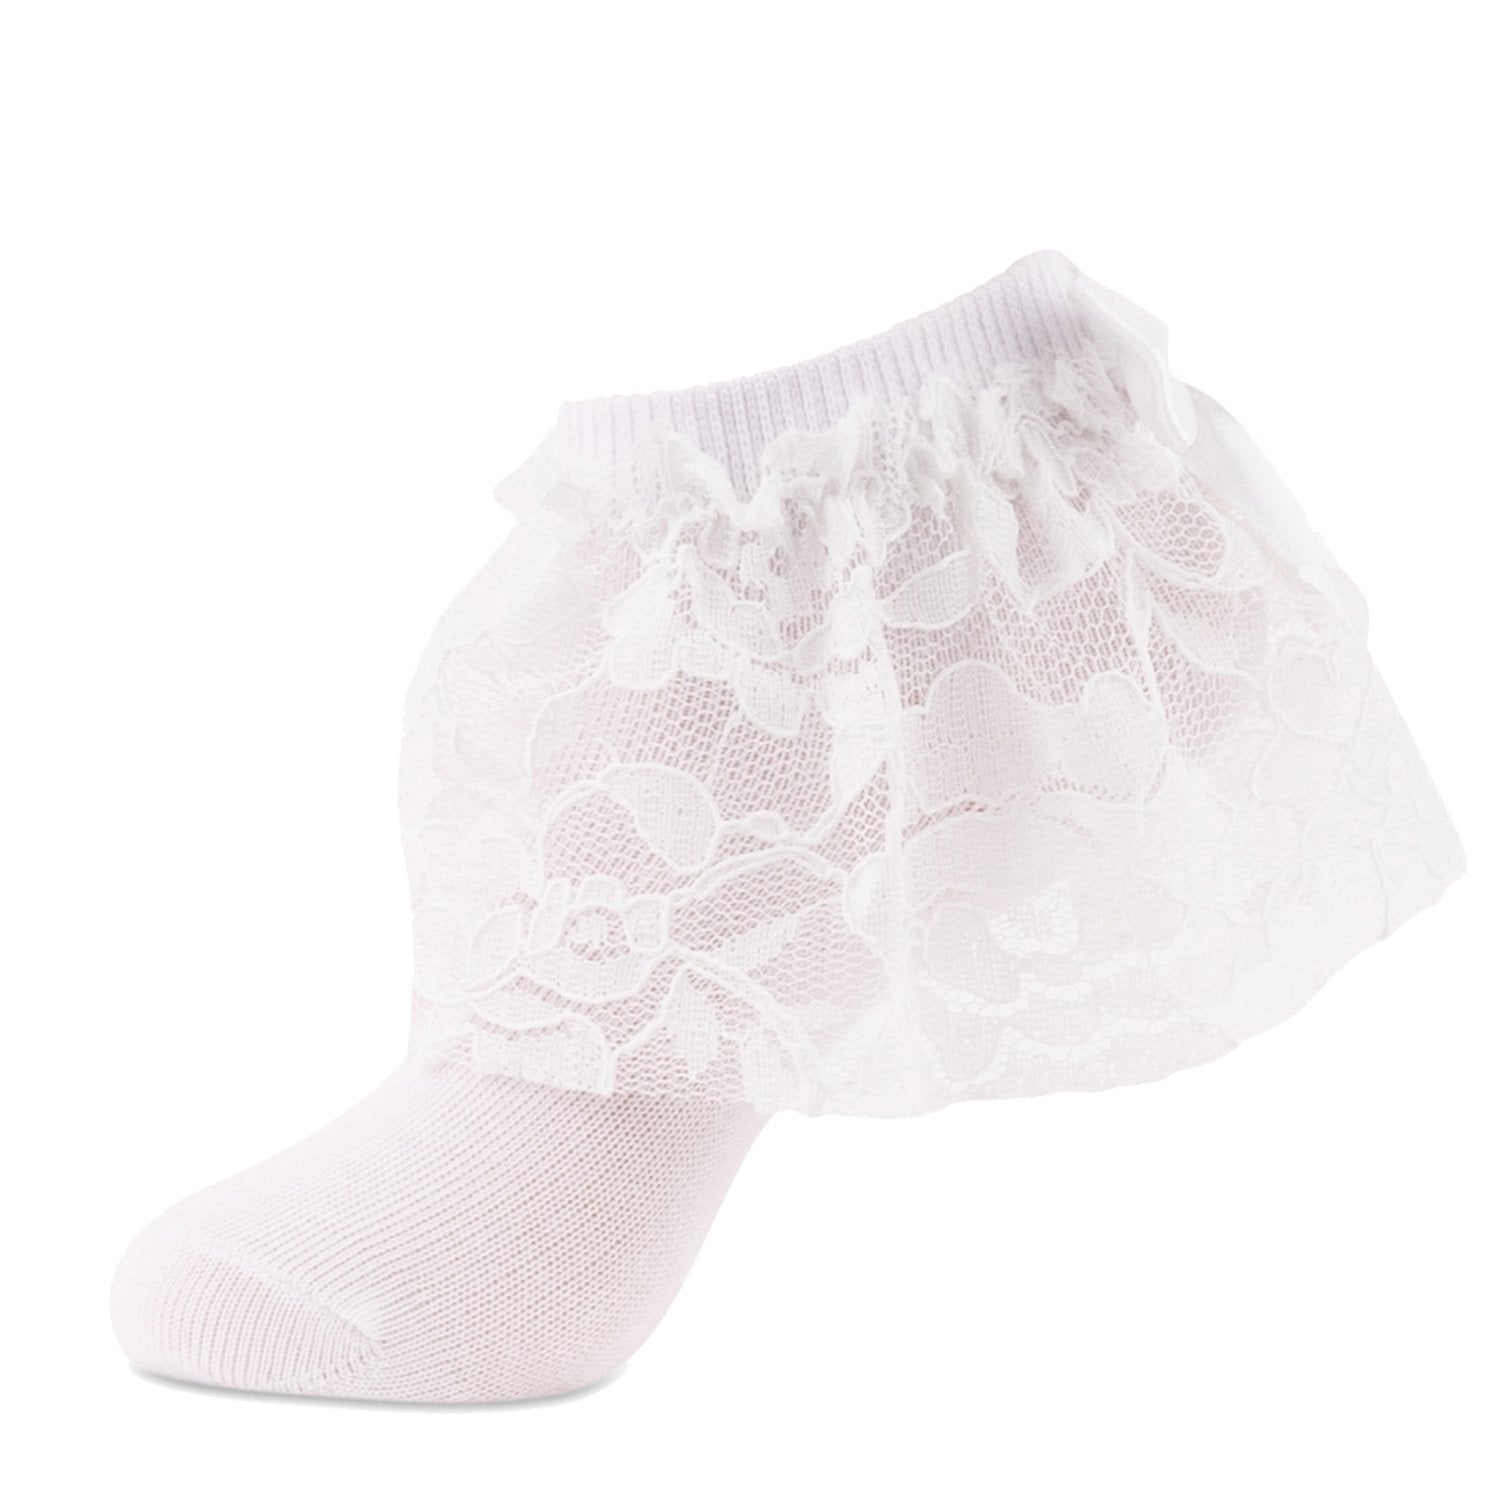 jrp socks white floral lace anklet sock